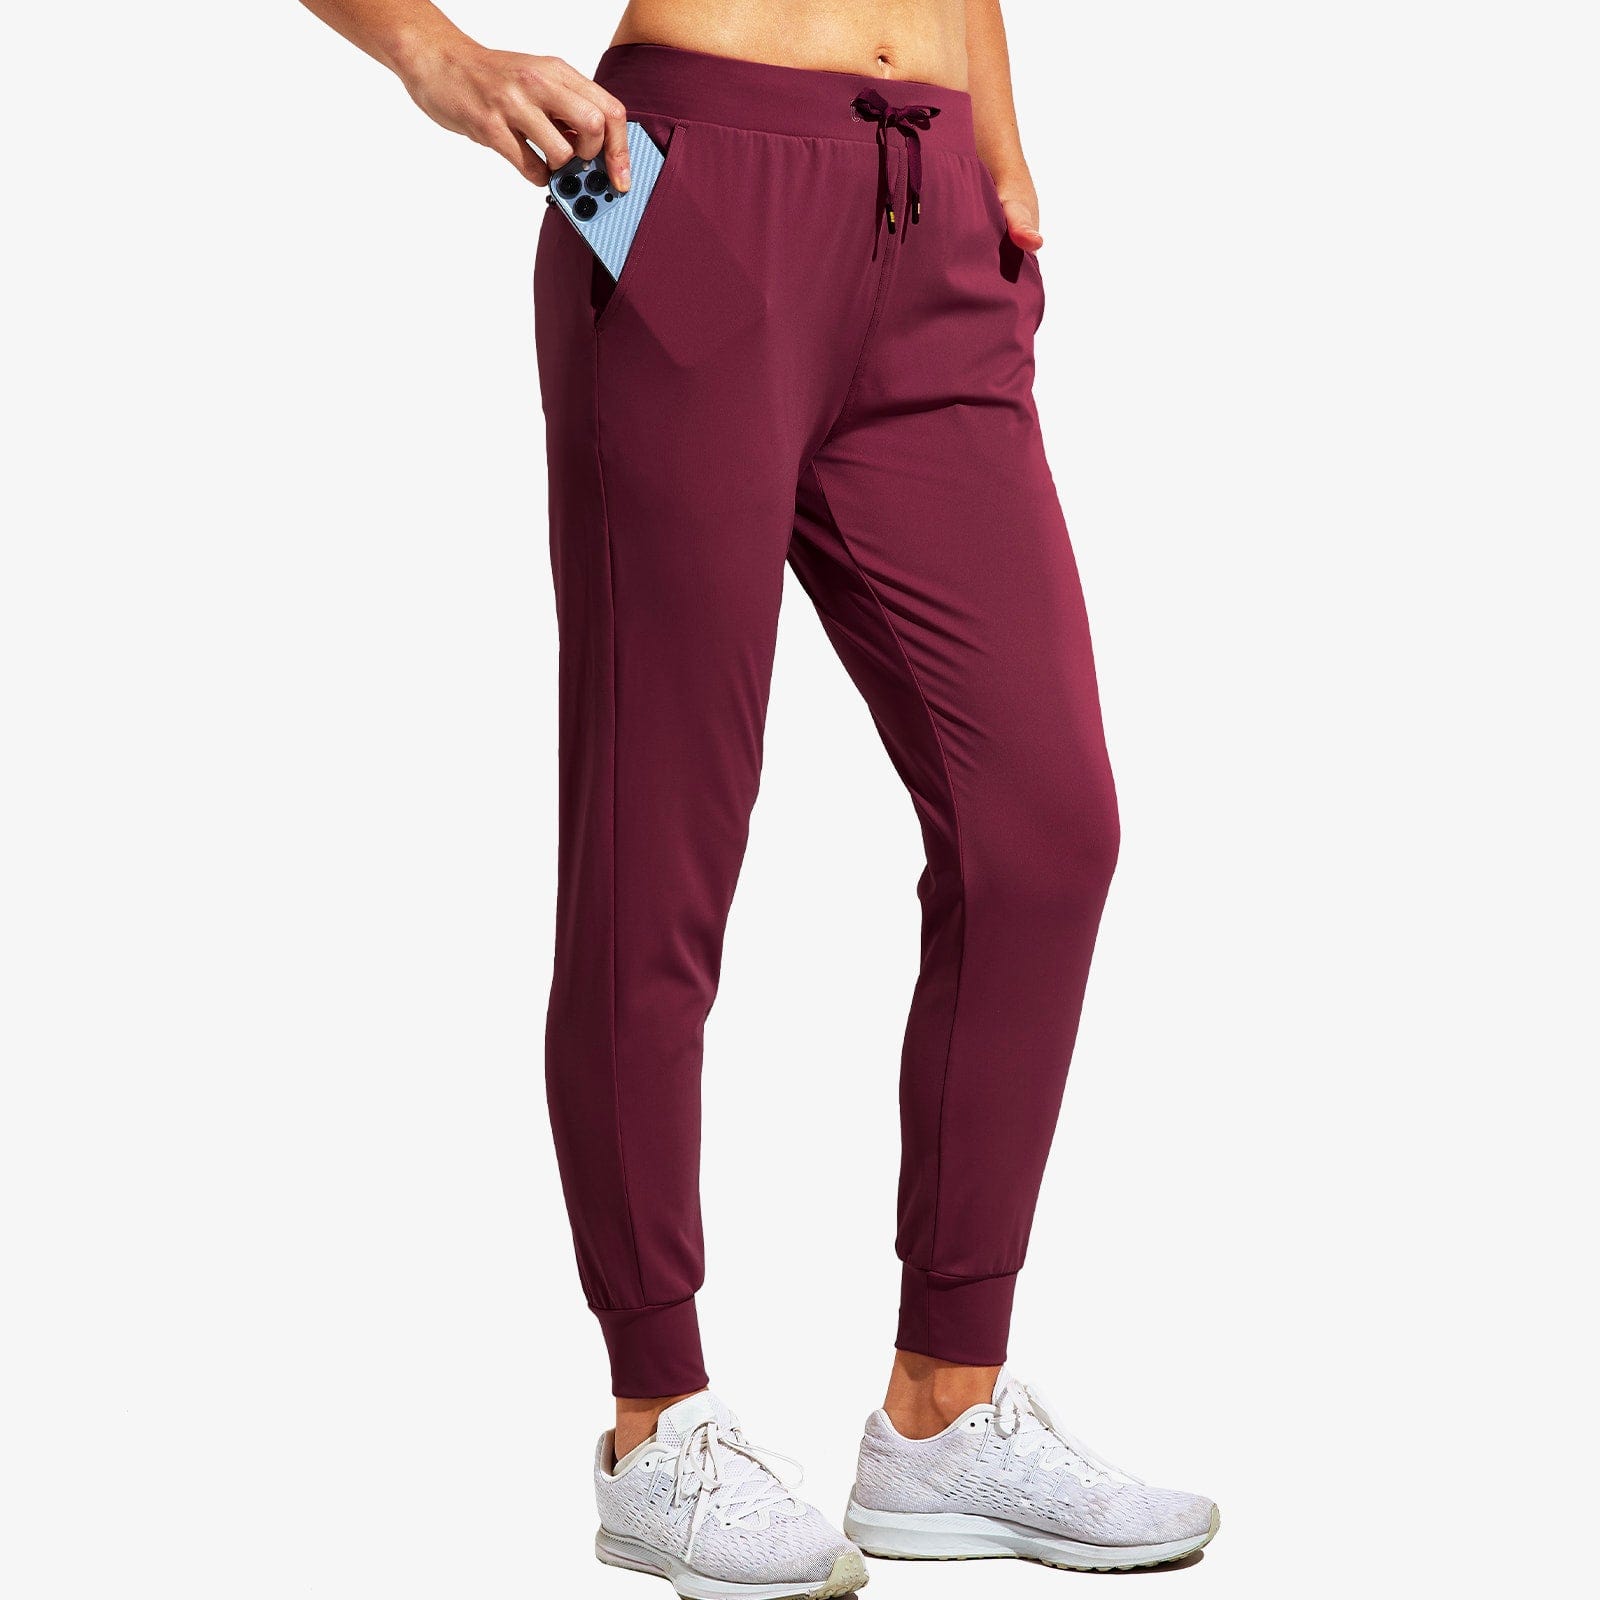 Women Joggers with Pockets Lightweight Athletic Sweatpants Women Active Pants Purple / XS MIER